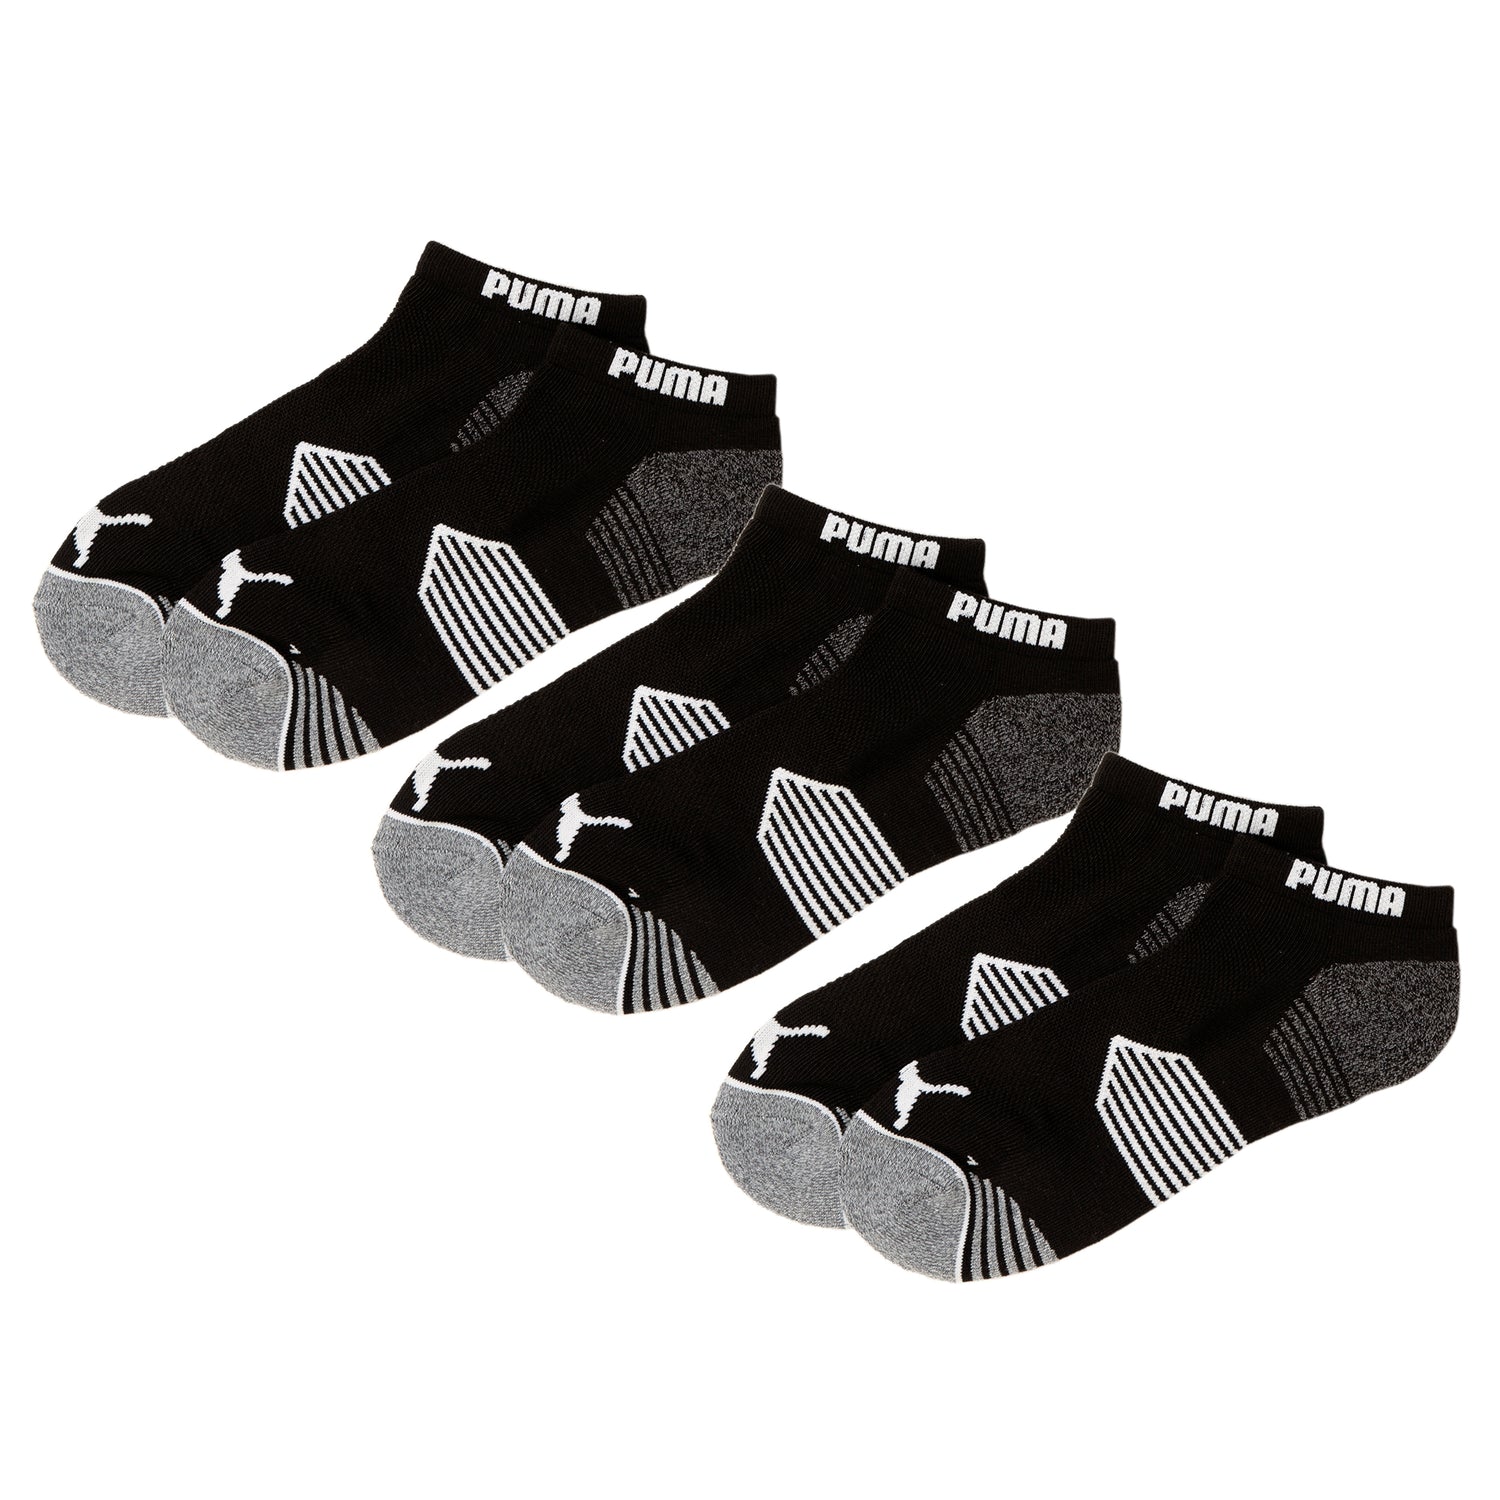 Puma JUNIOR CREW 9 PACK UNISEX - Socks - grey/white/black/black 